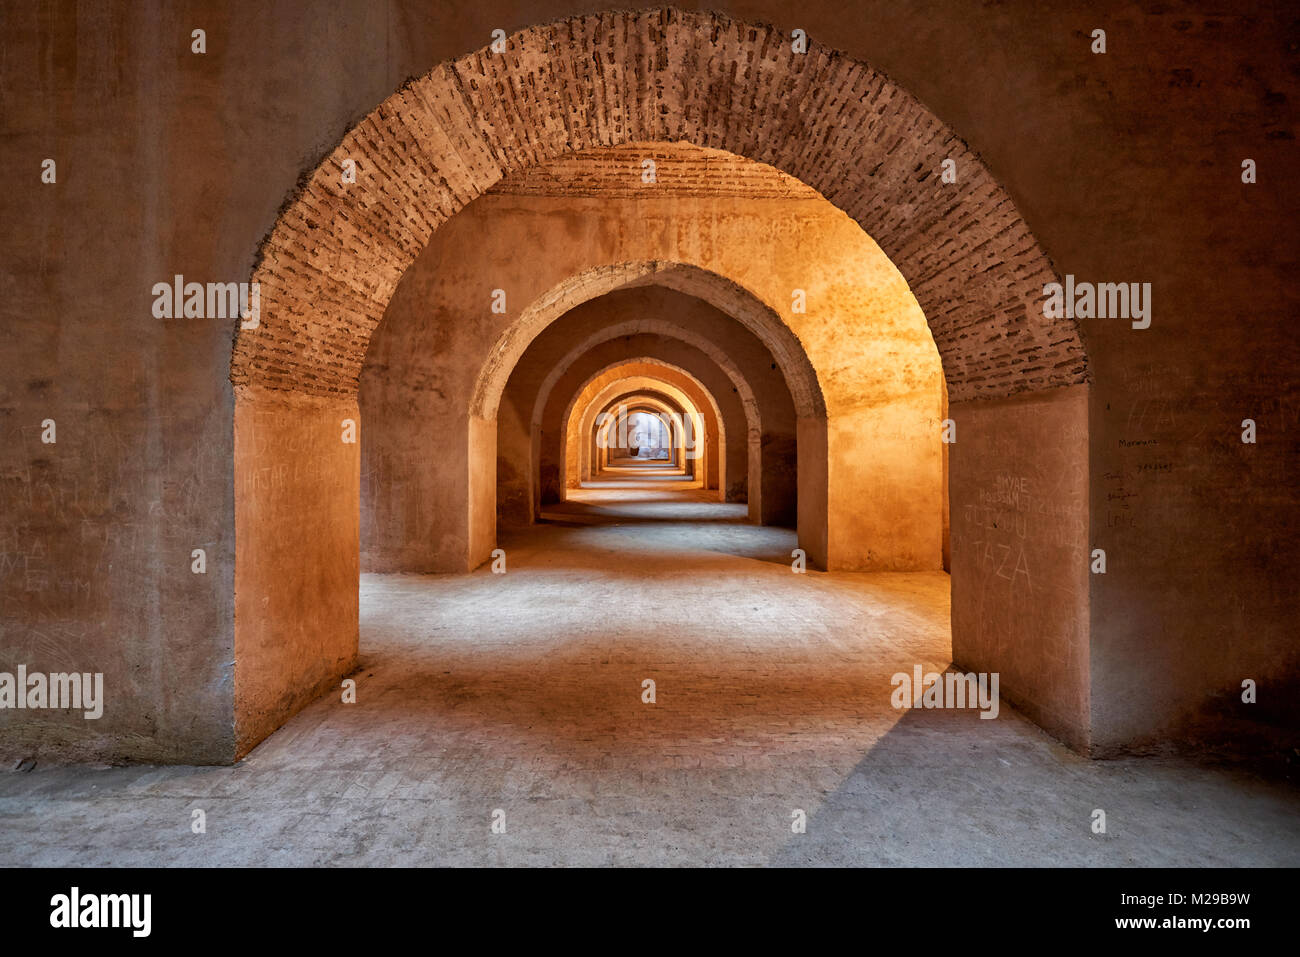 catacombs of Cara subterranean prison , Prison de Kara, Meknes, Morocco, Africa Stock Photo